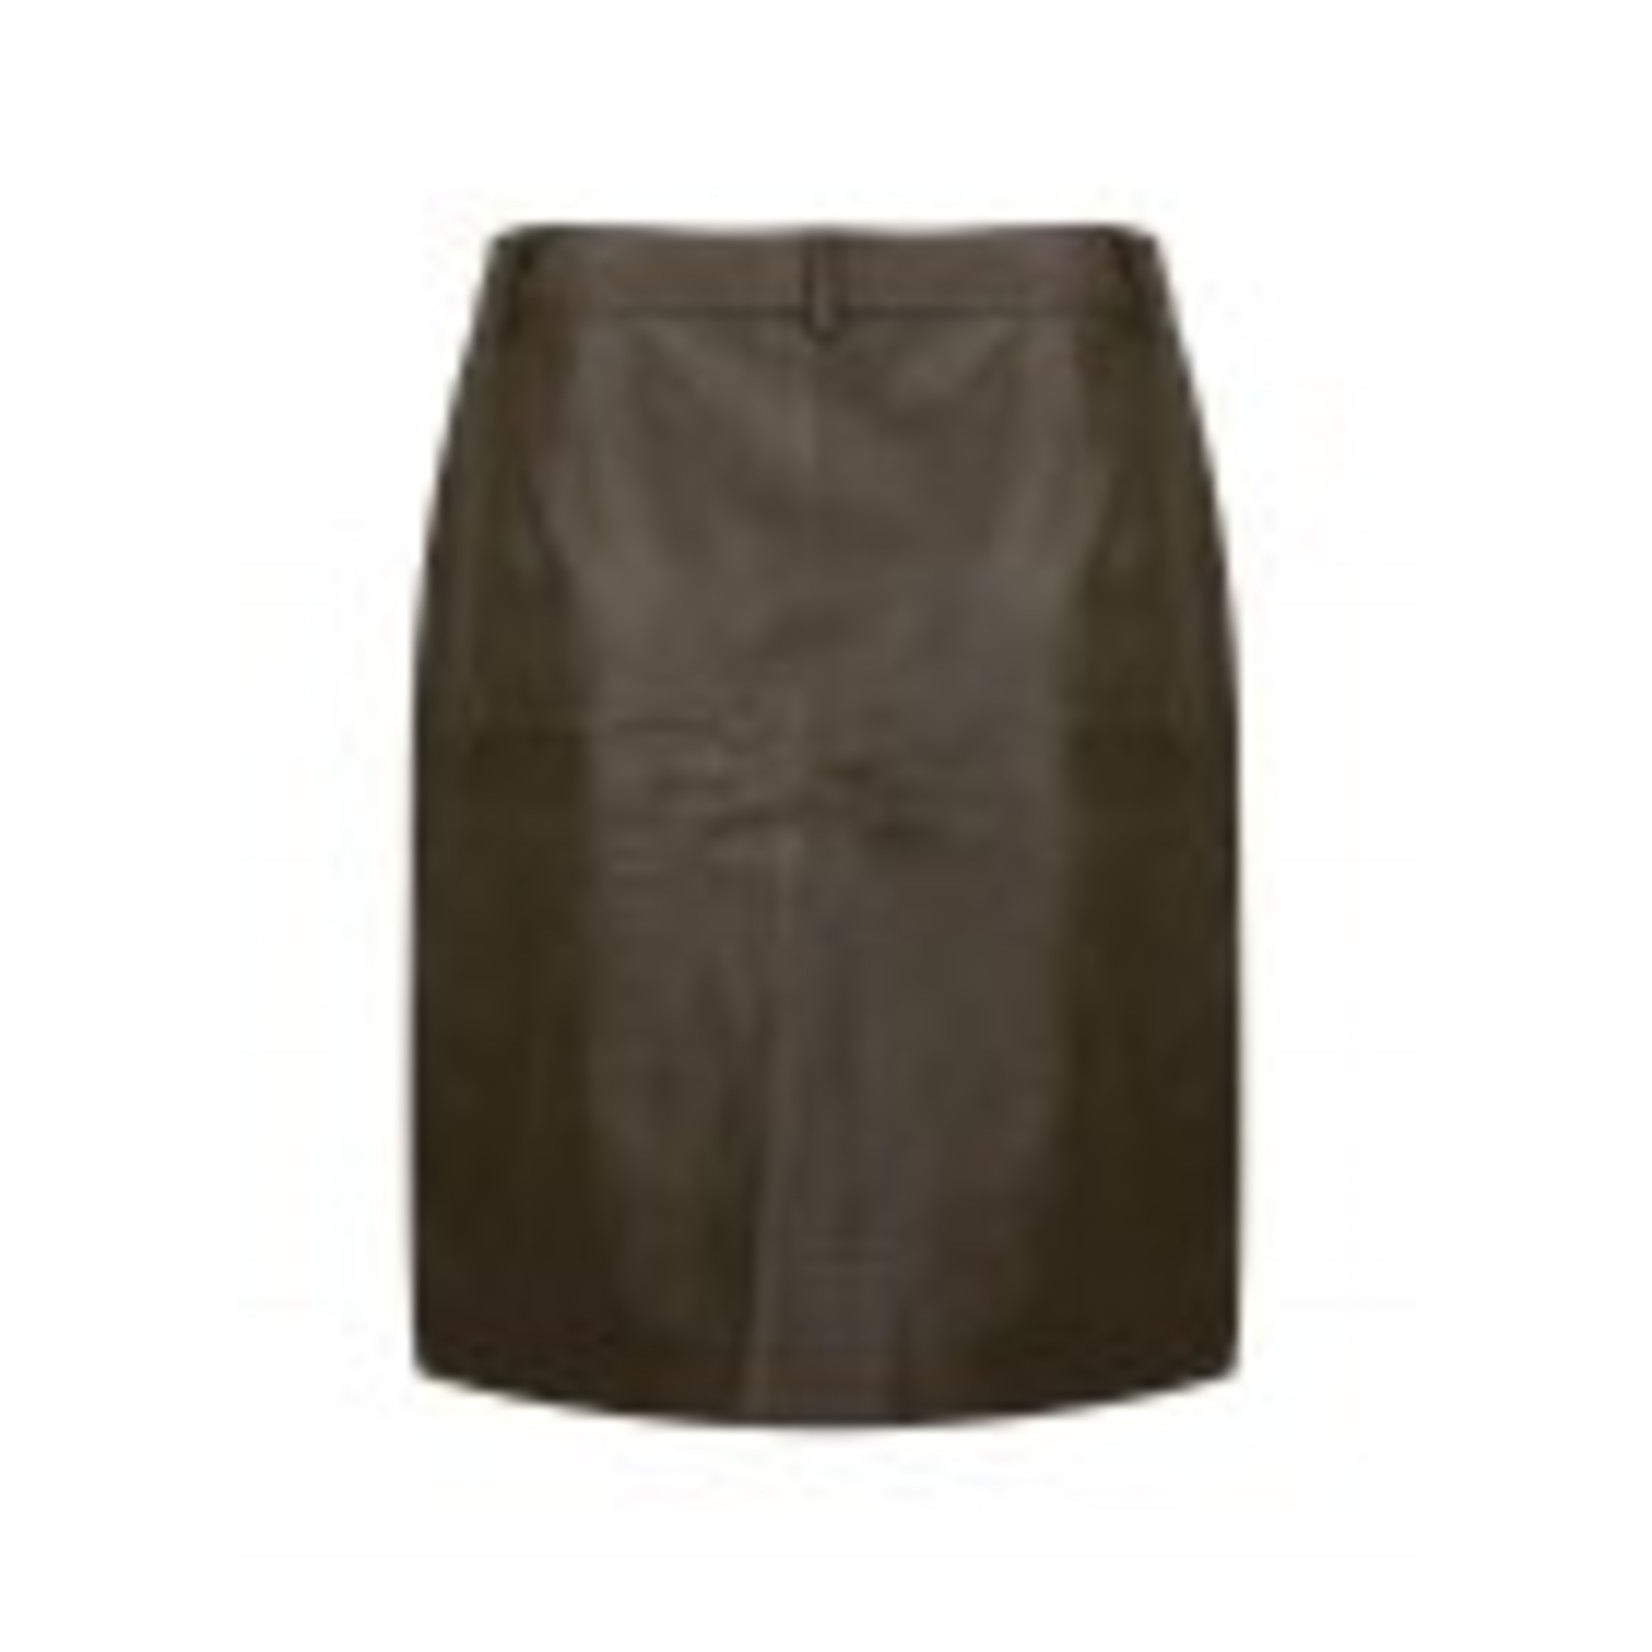 Mini skirt, faux leather, army kleur! Super stoer!